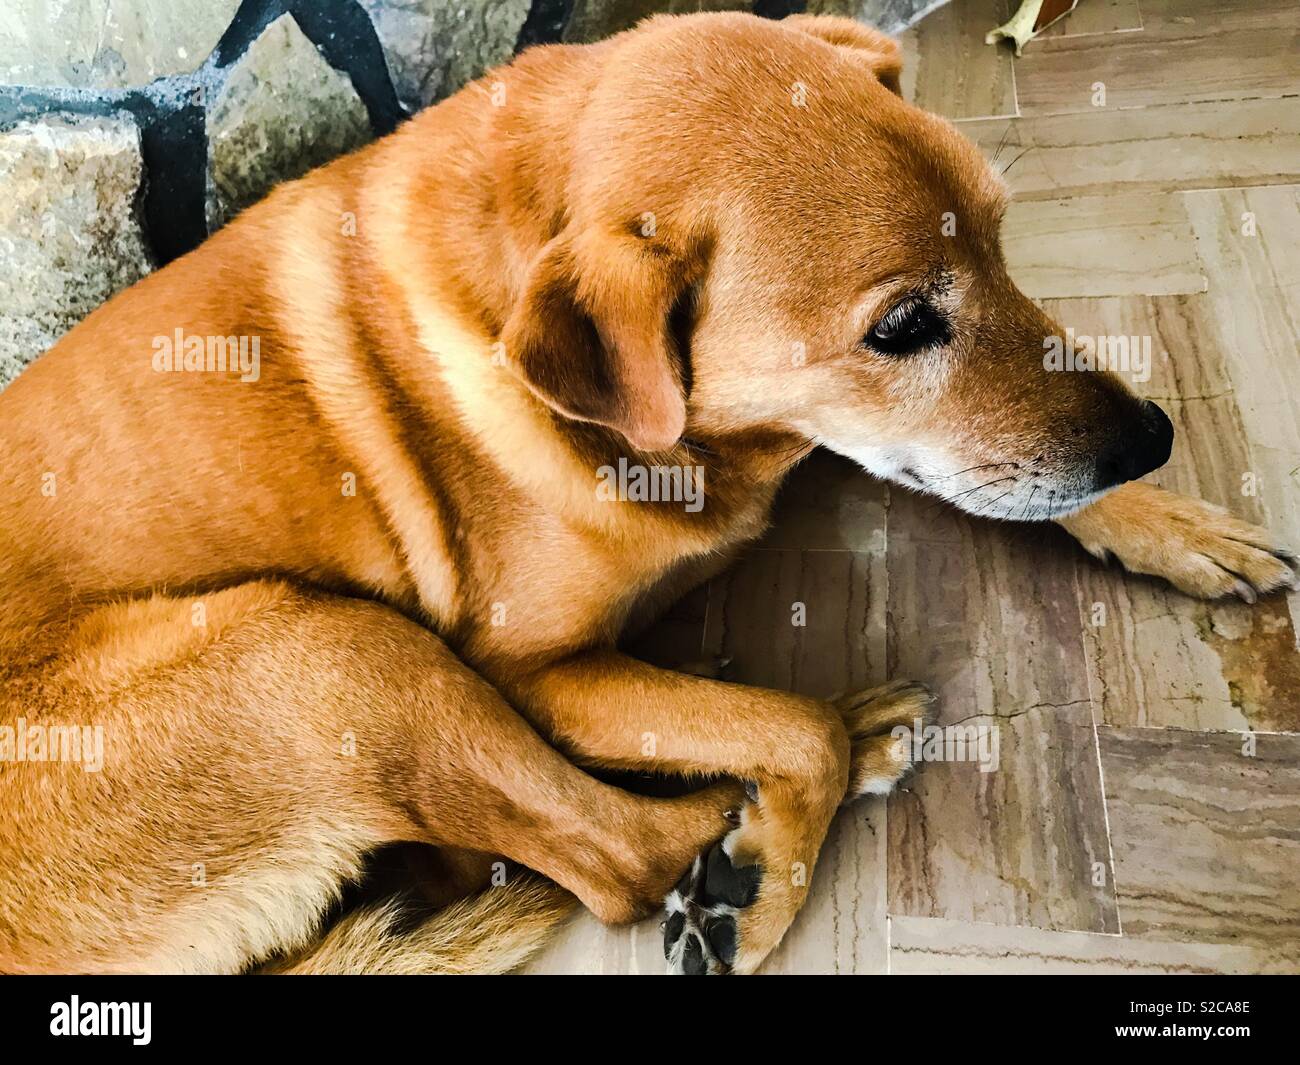 Golden fur dog Stock Photo